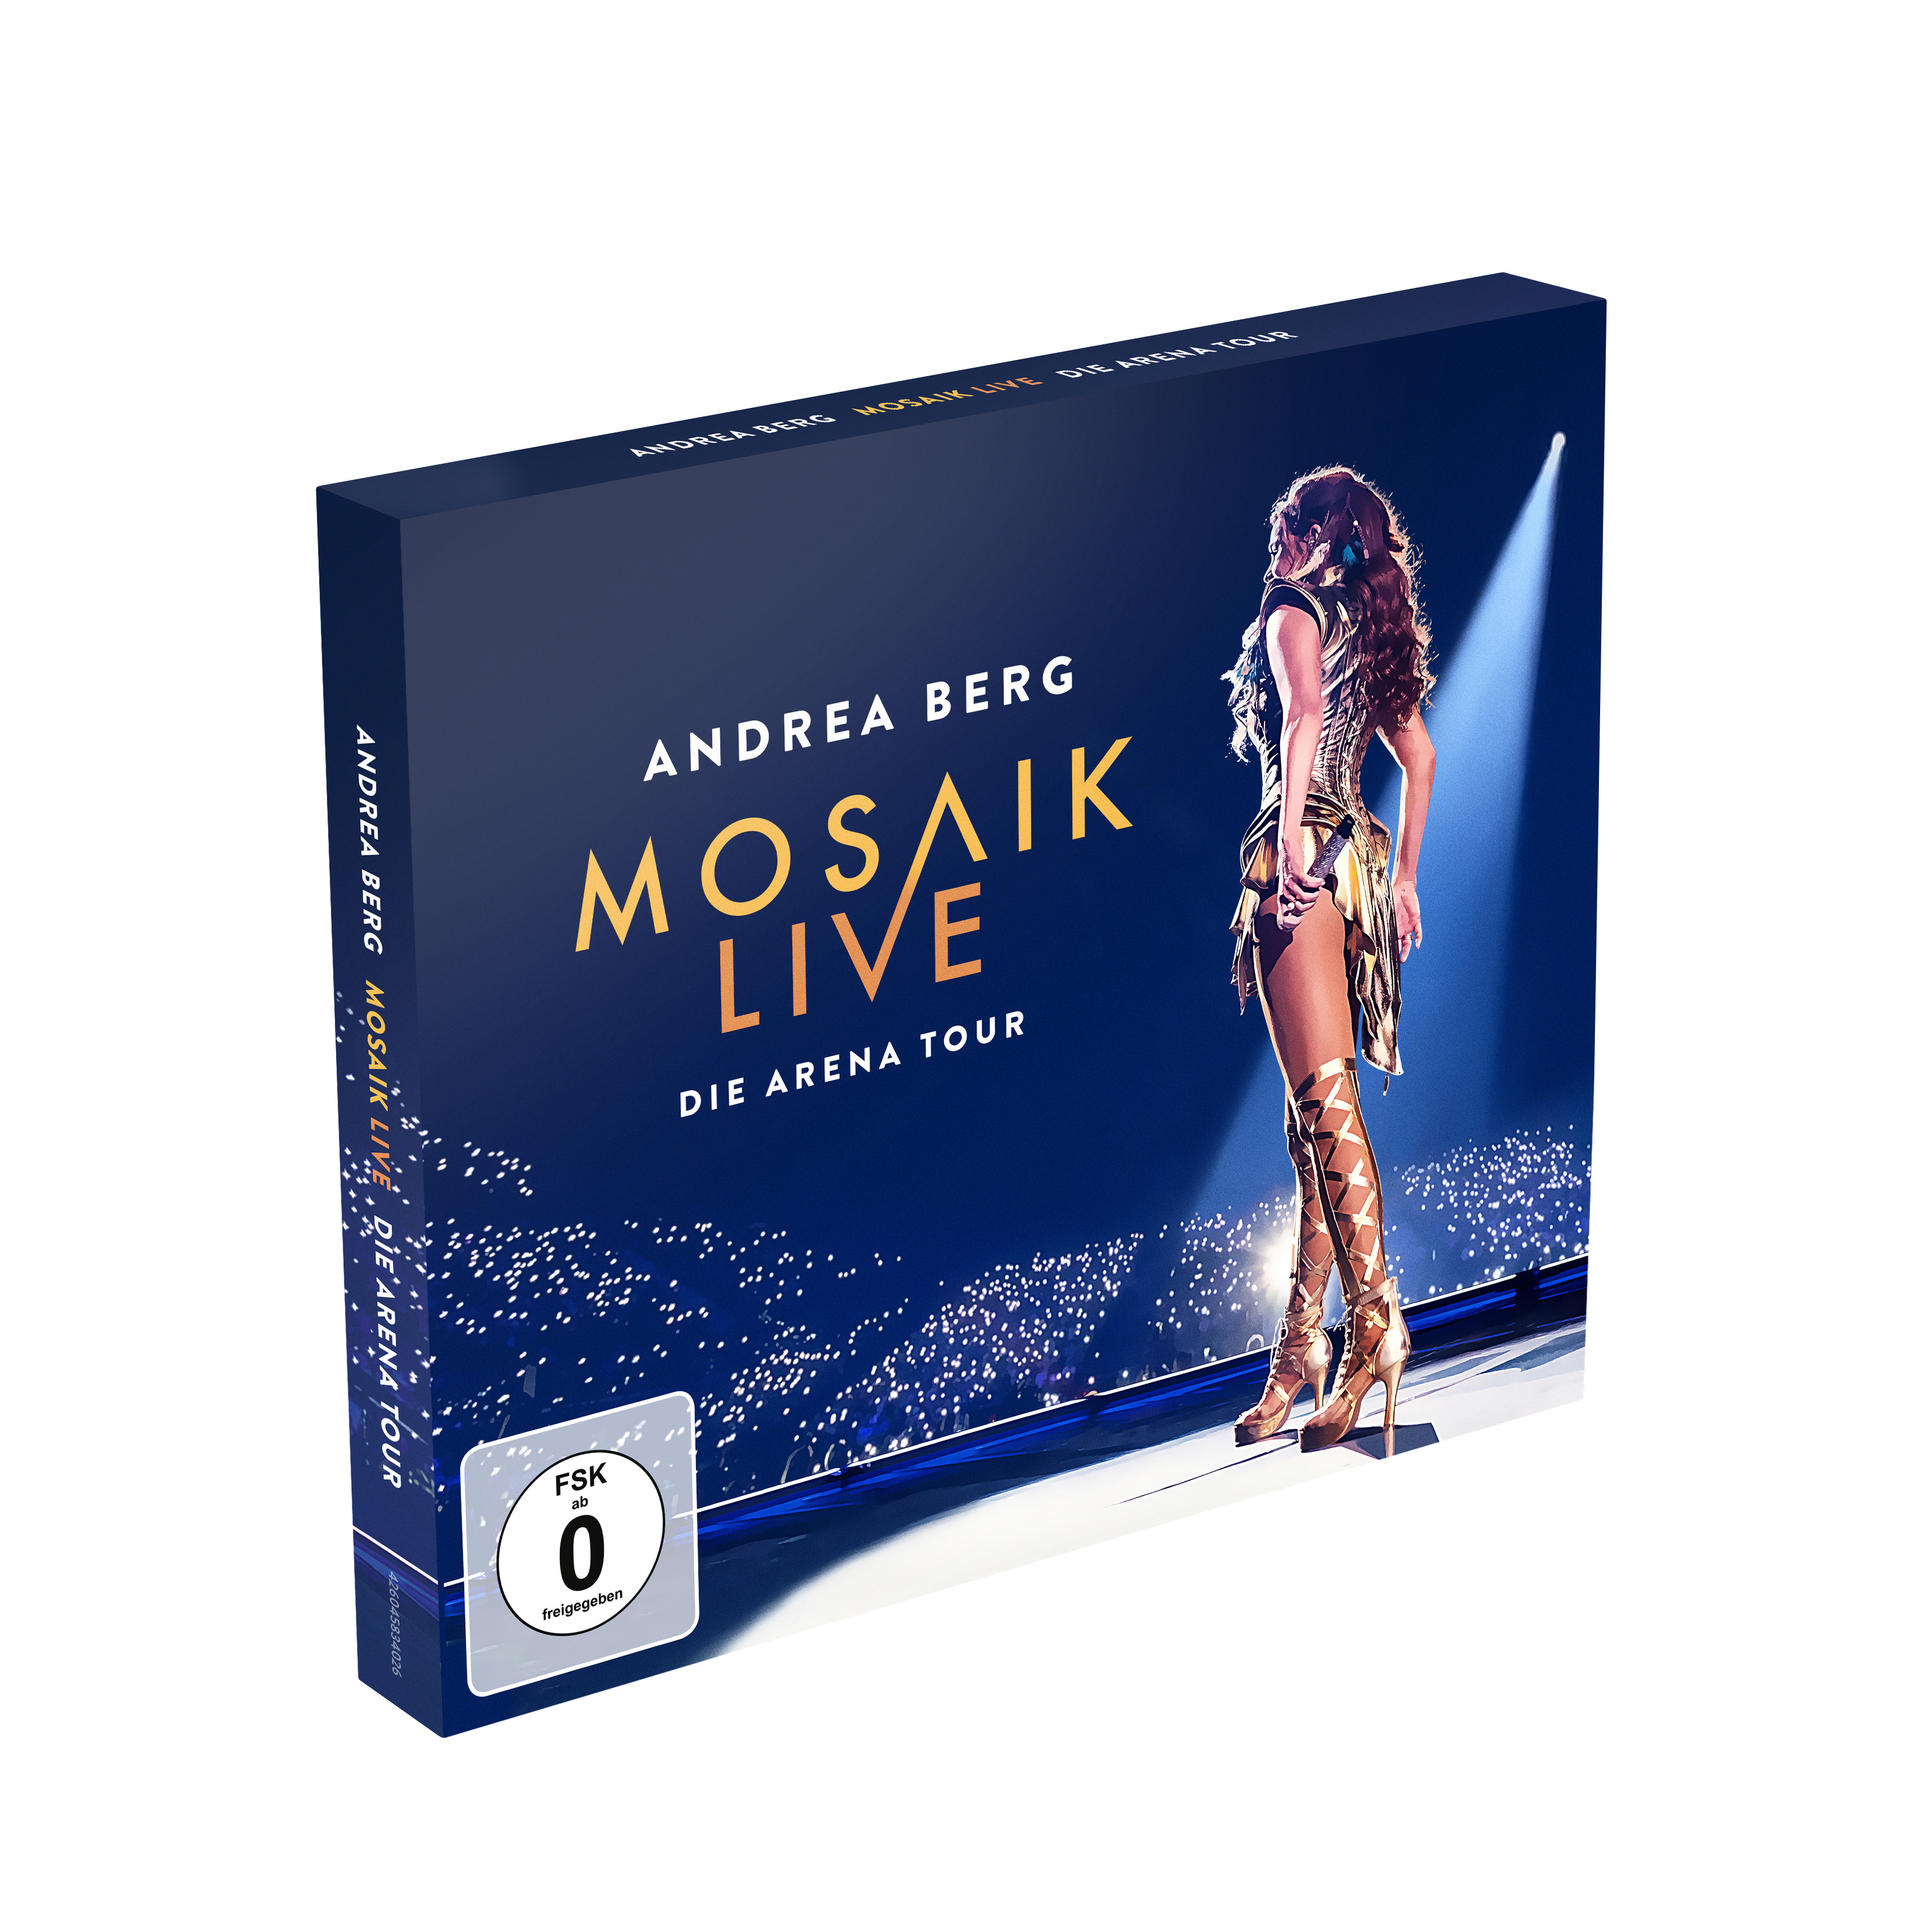 Andrea Berg - Live-Die DVD + Tour Arena (CD Video) Mosaik 